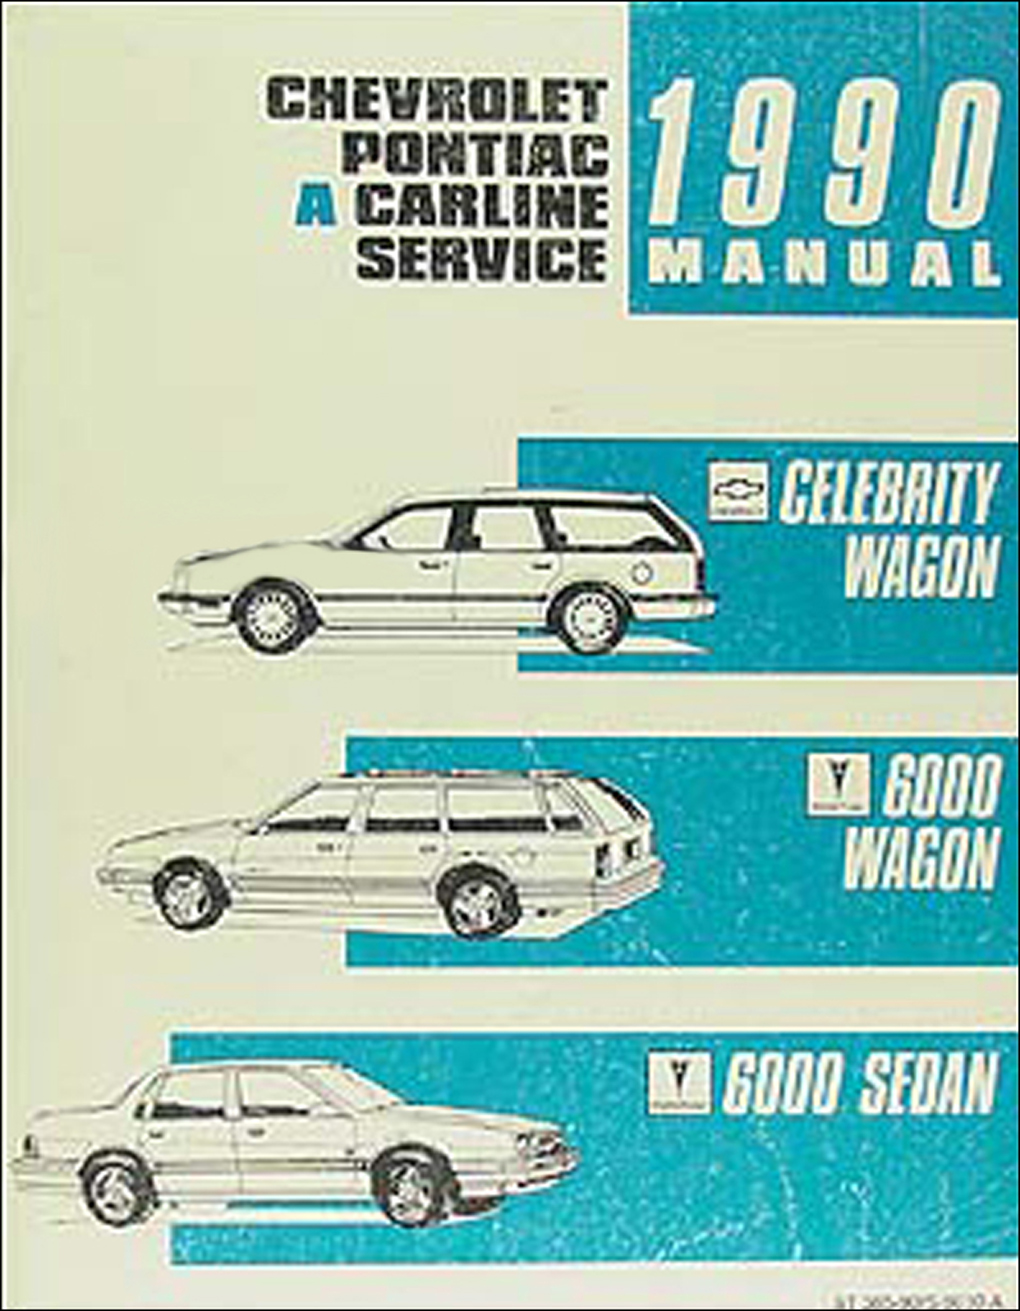 1990 Celebrity Wagon & 6000 Shop Manual Original 